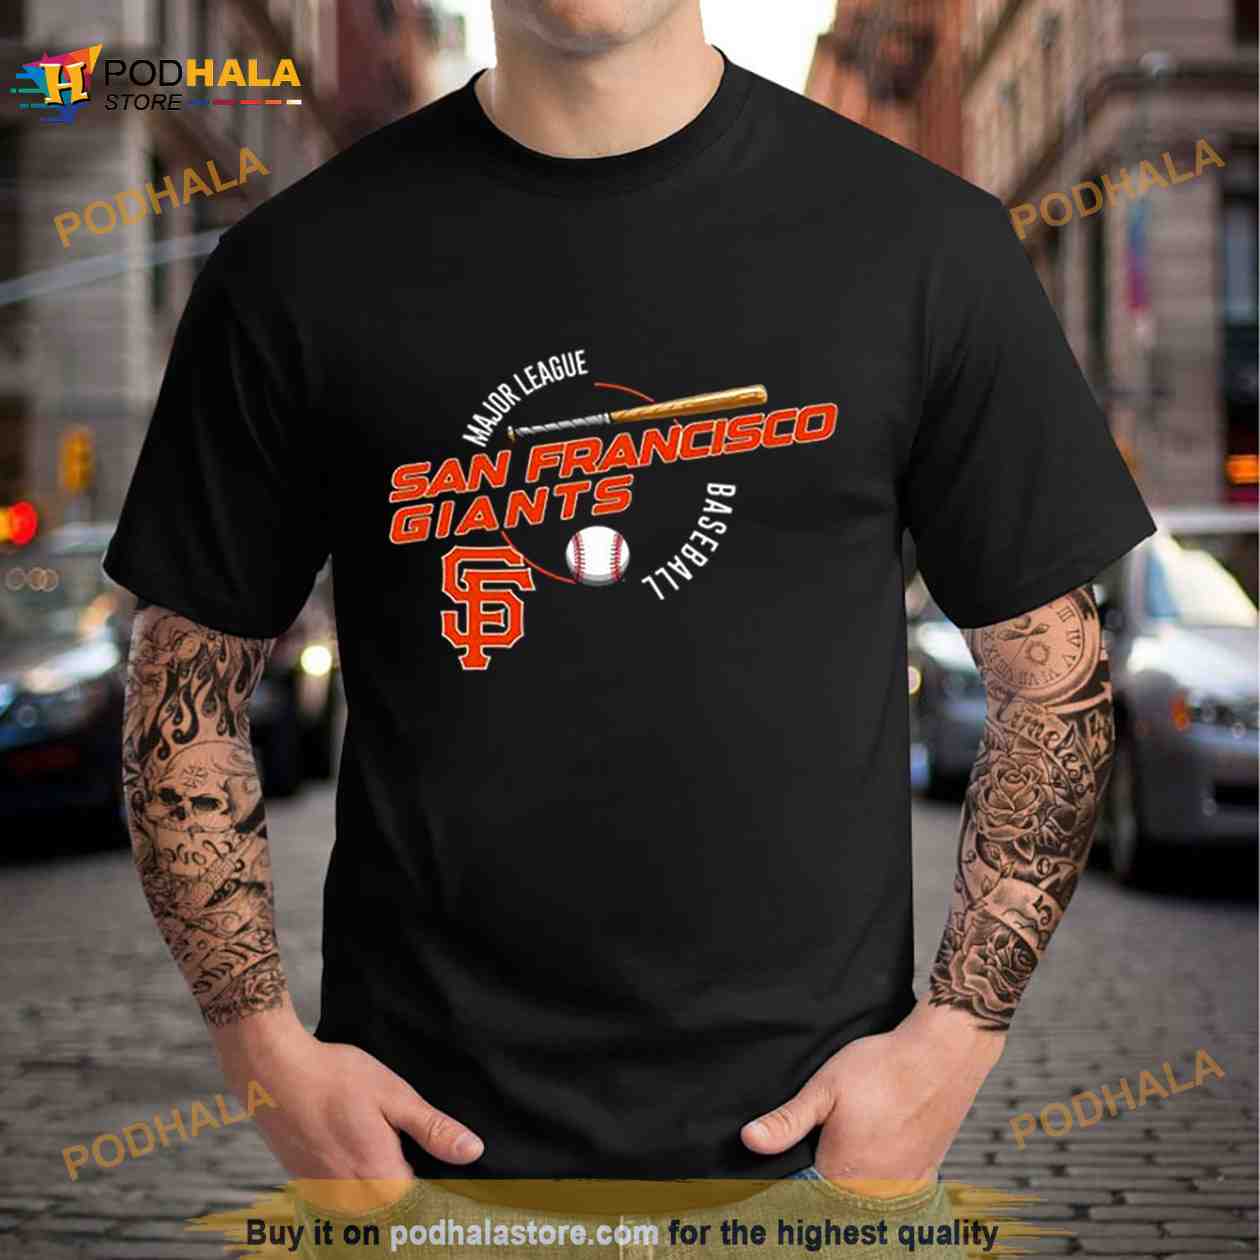 San Francisco Giants Team Shop 